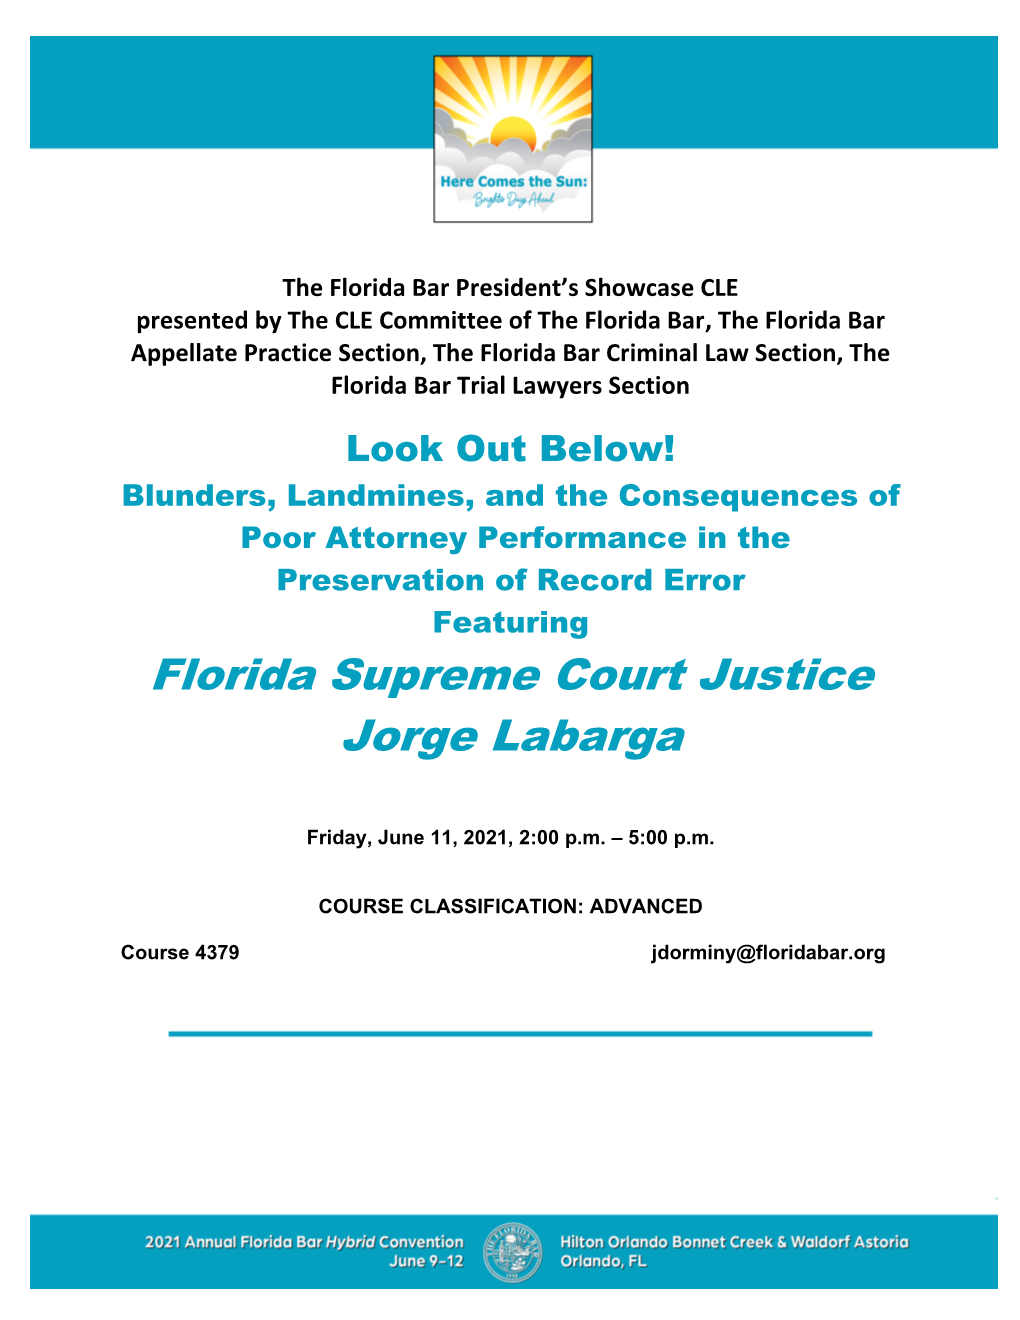 Florida Supreme Court Justice Jorge Labarga